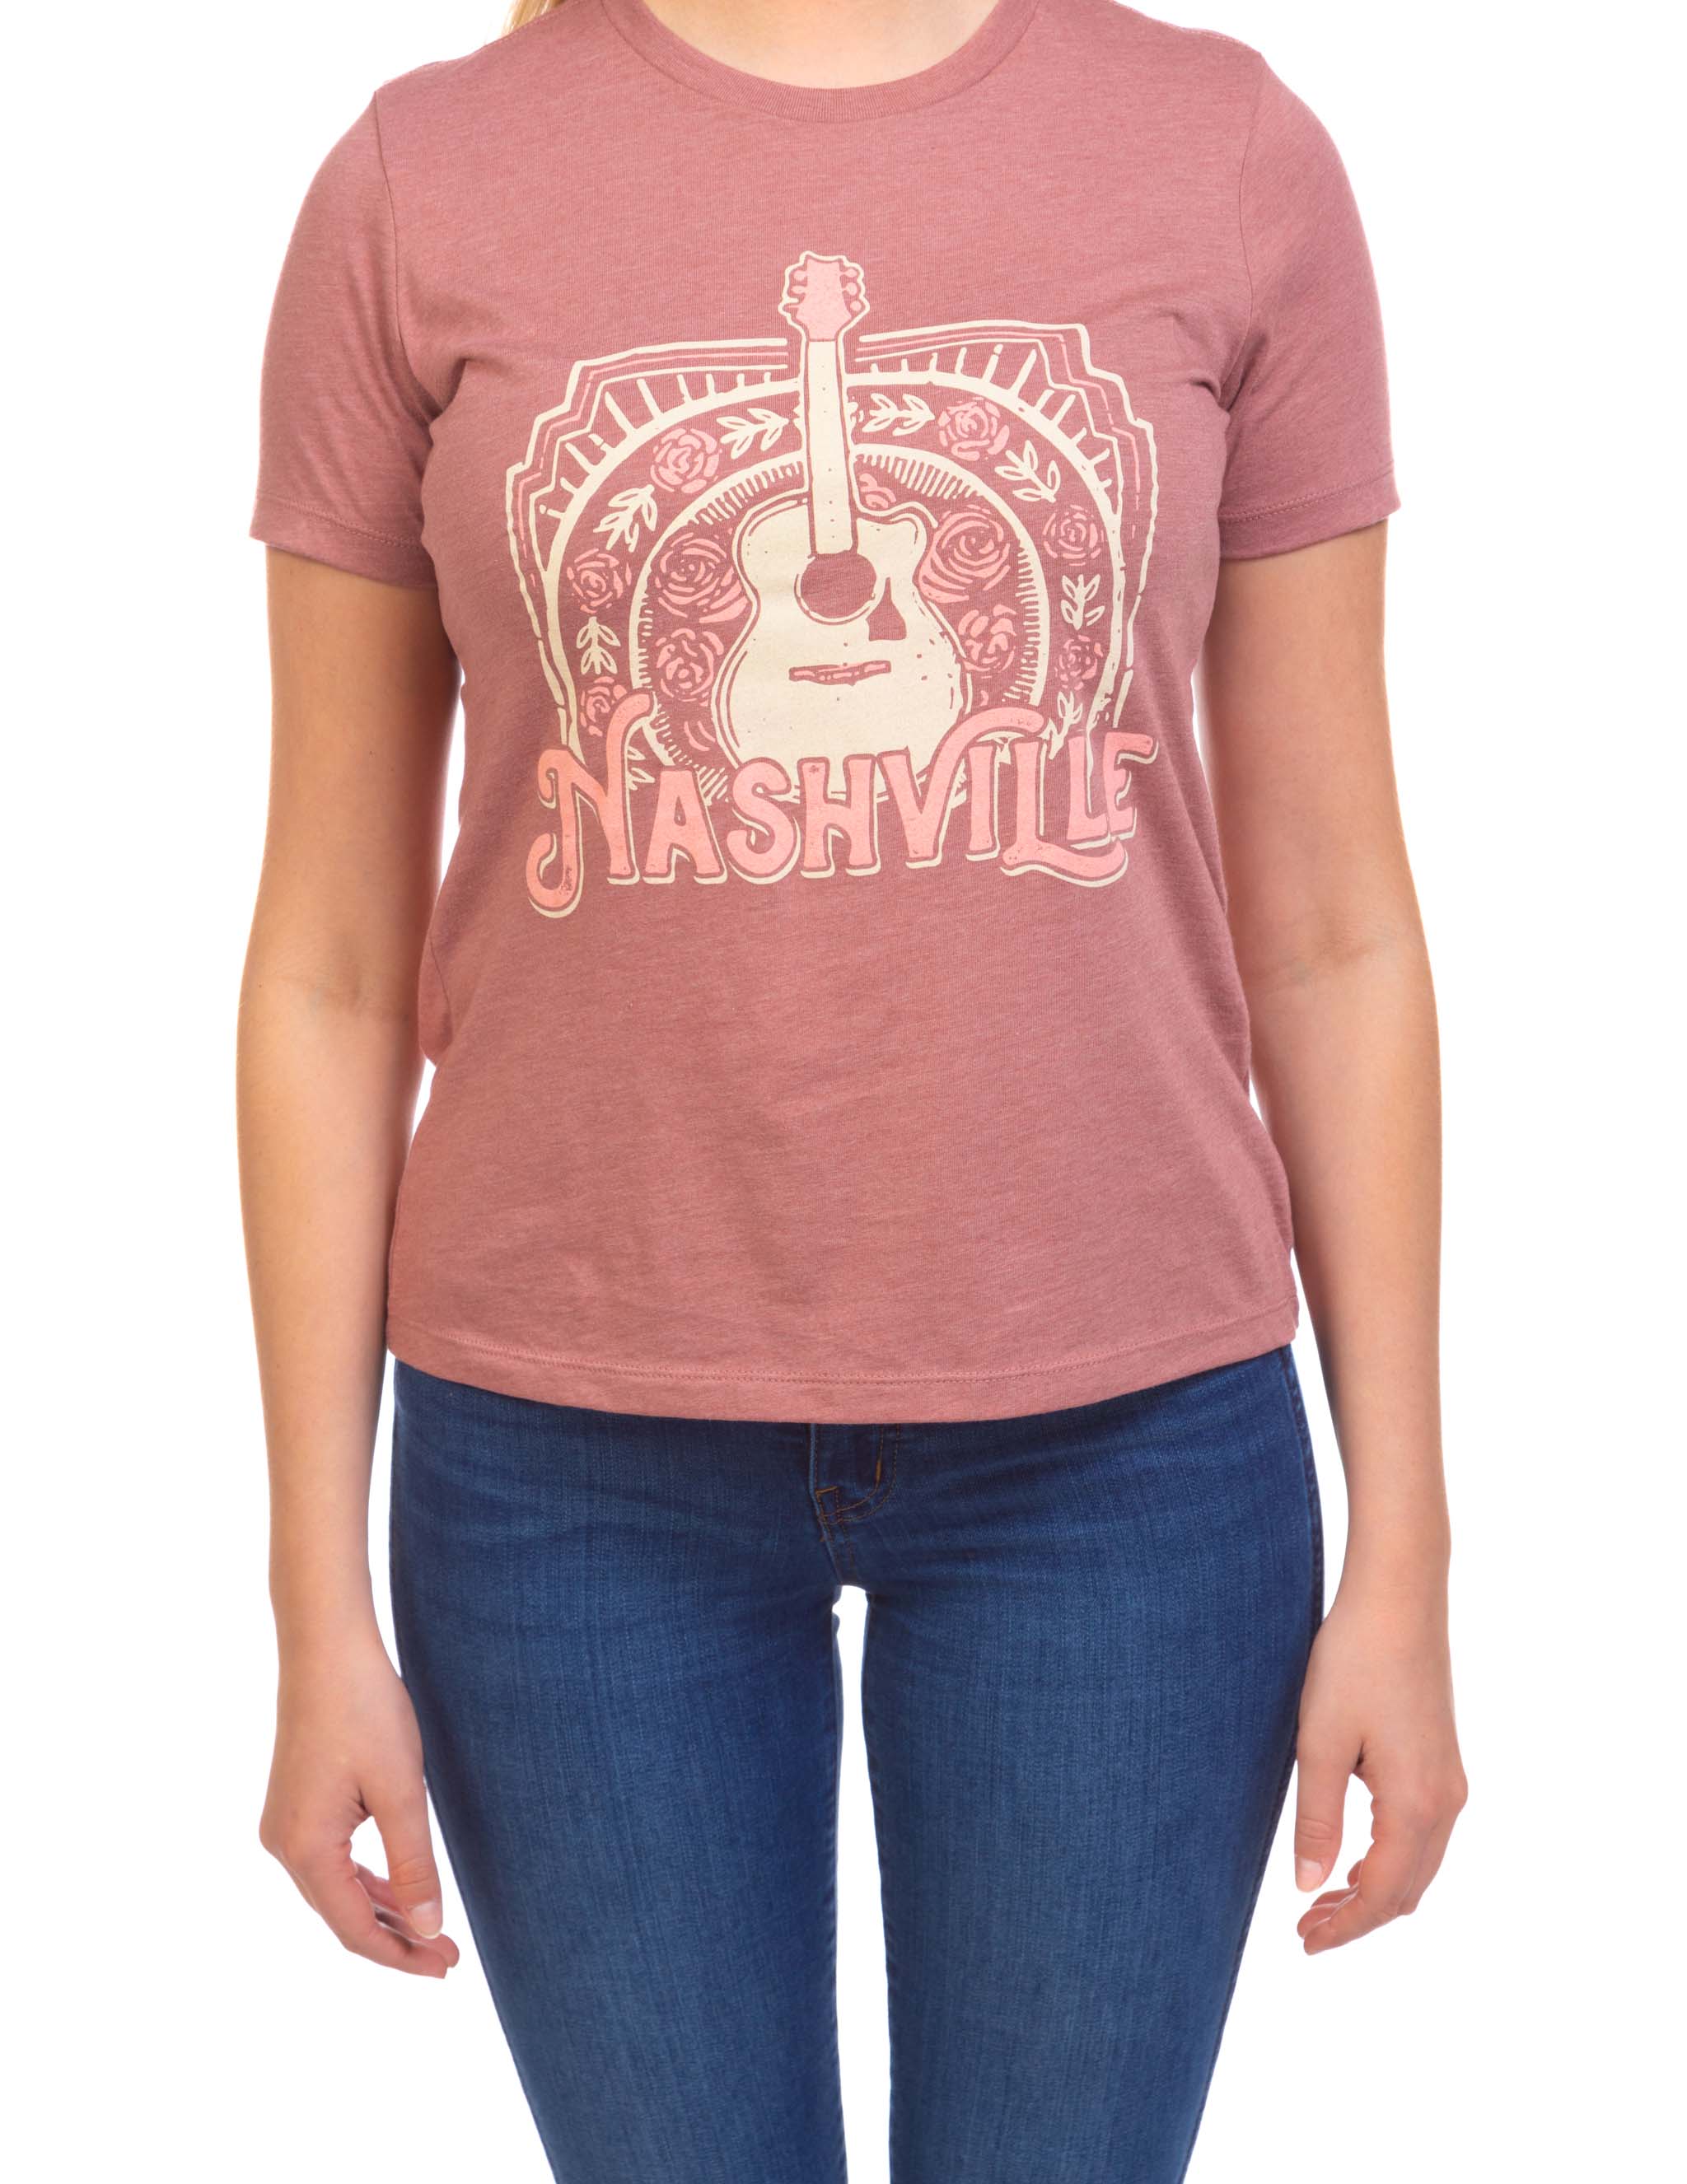 Wildhorse Nashville Roses Women's T-Shirt